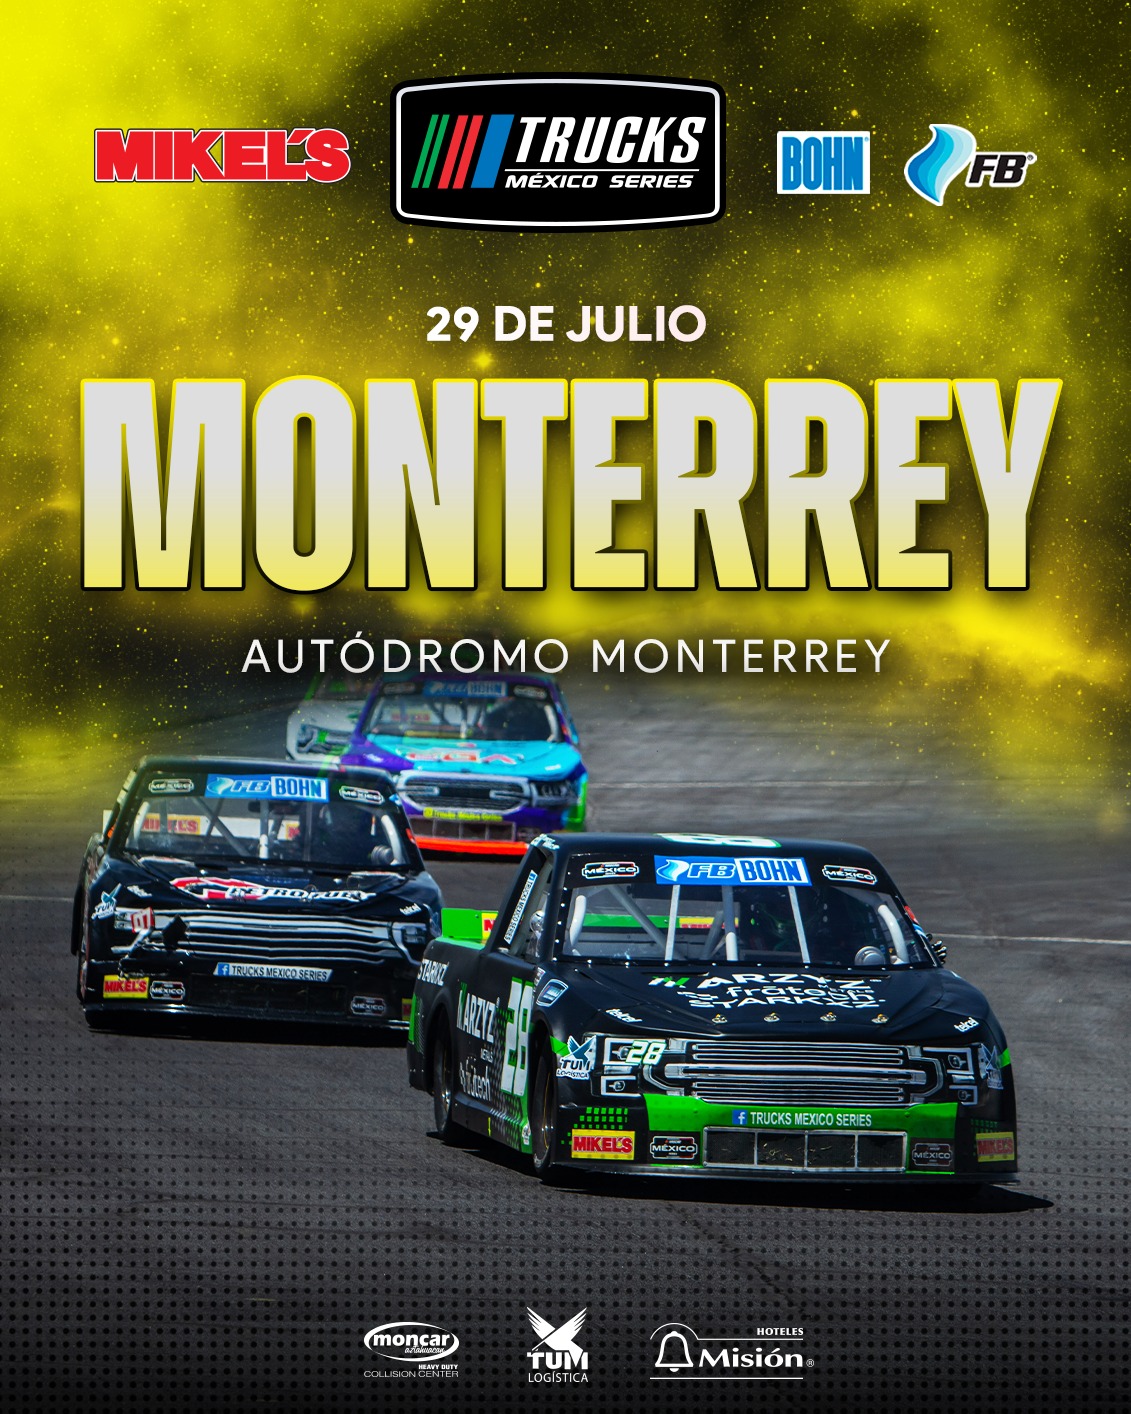 Las Trucks México Series, a desafiar el Autódromo de Monterrey